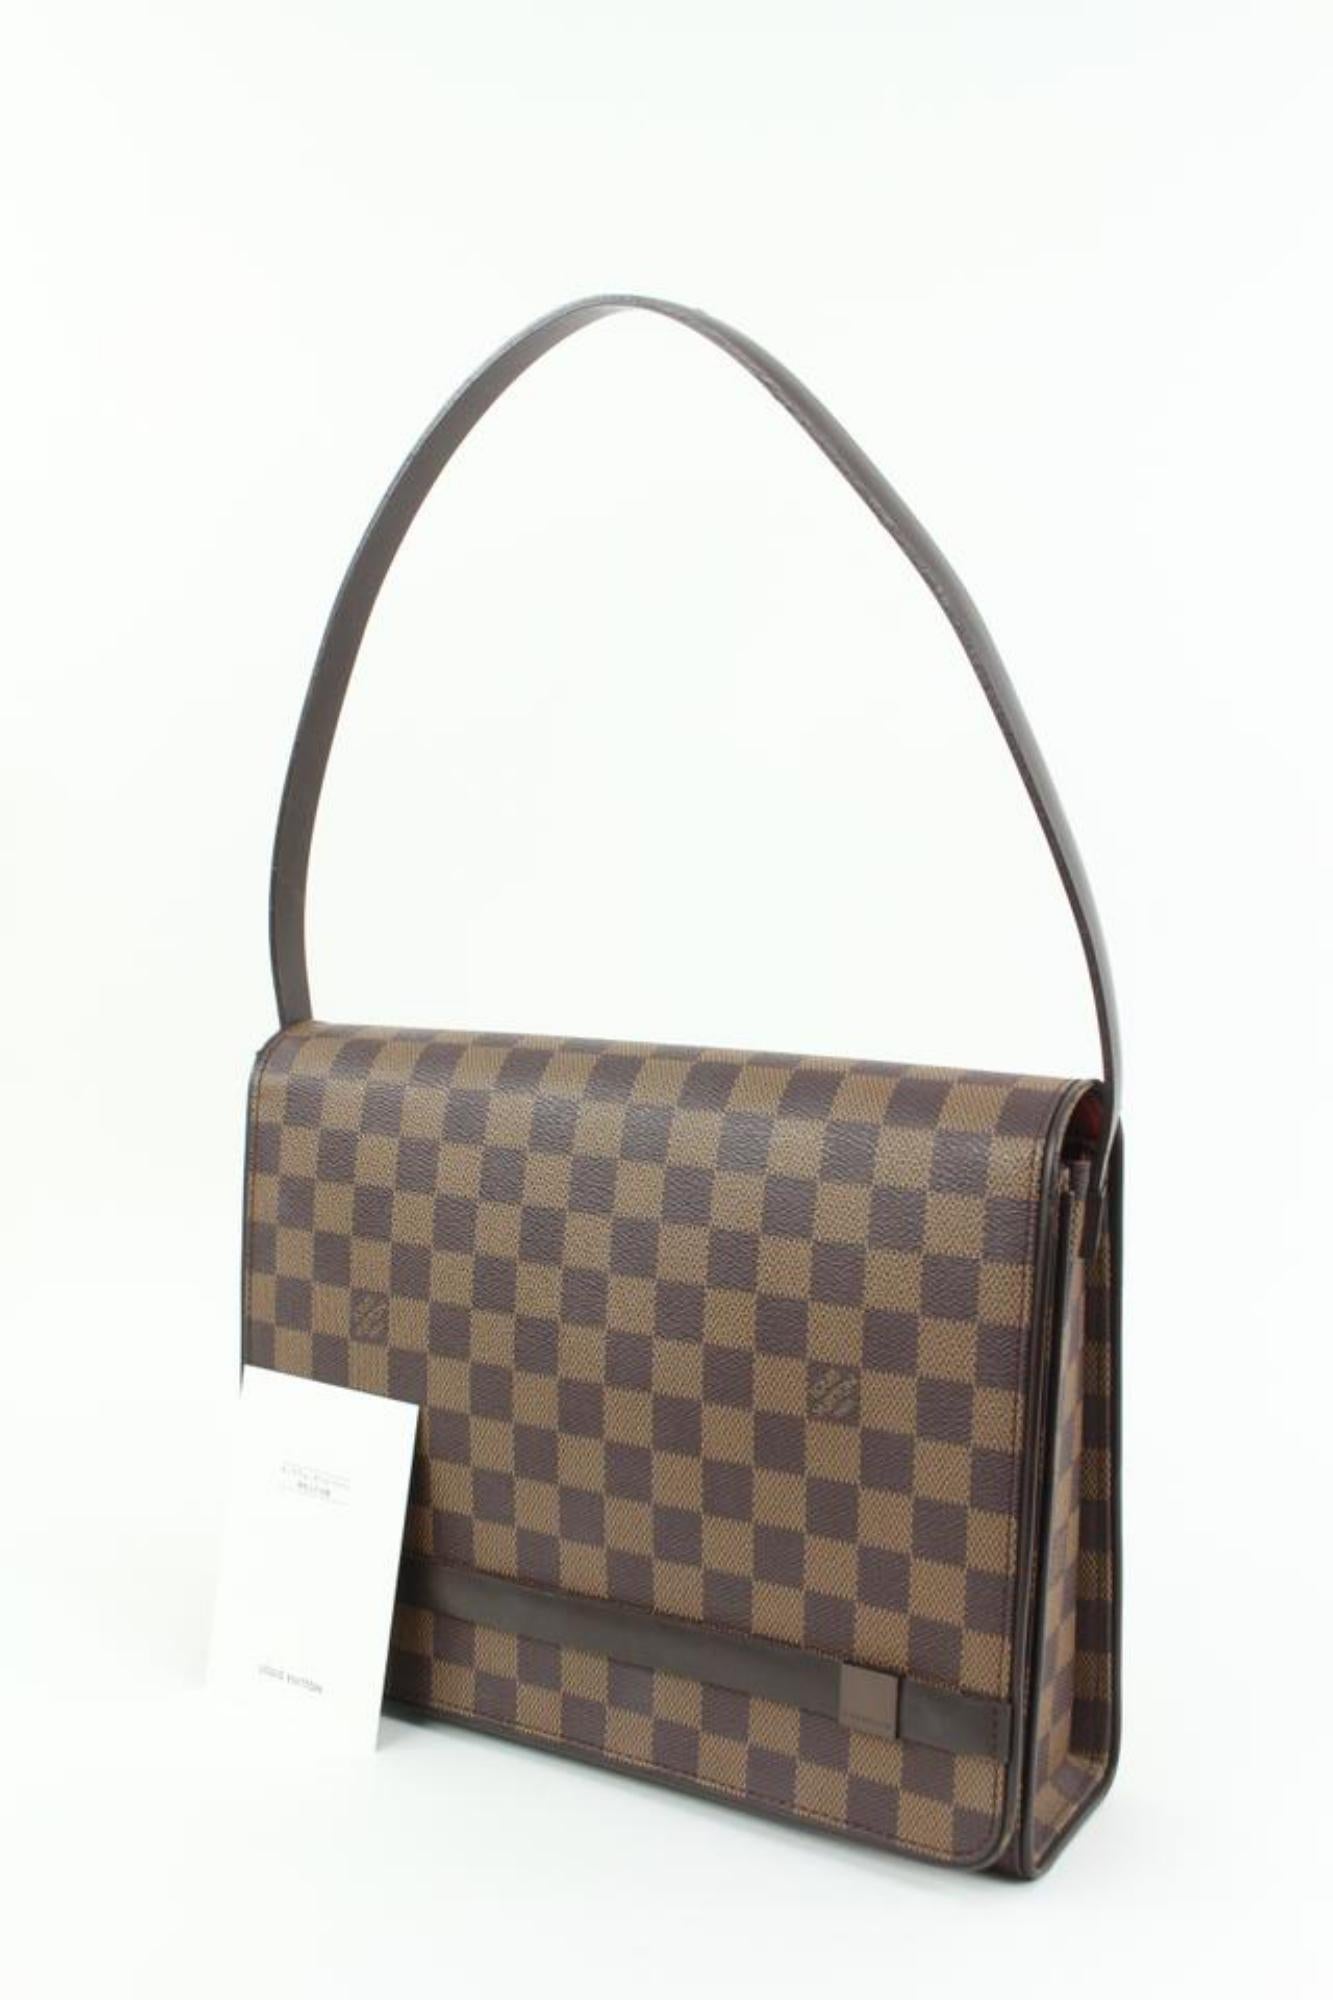 Louis Vuitton Discontinued Damier Ebene Tribeca Carre Flap Shoulder Bag 99lv310s
Date Code/Serial Number: TH0021
Made In: France
Measurements: Length:  11